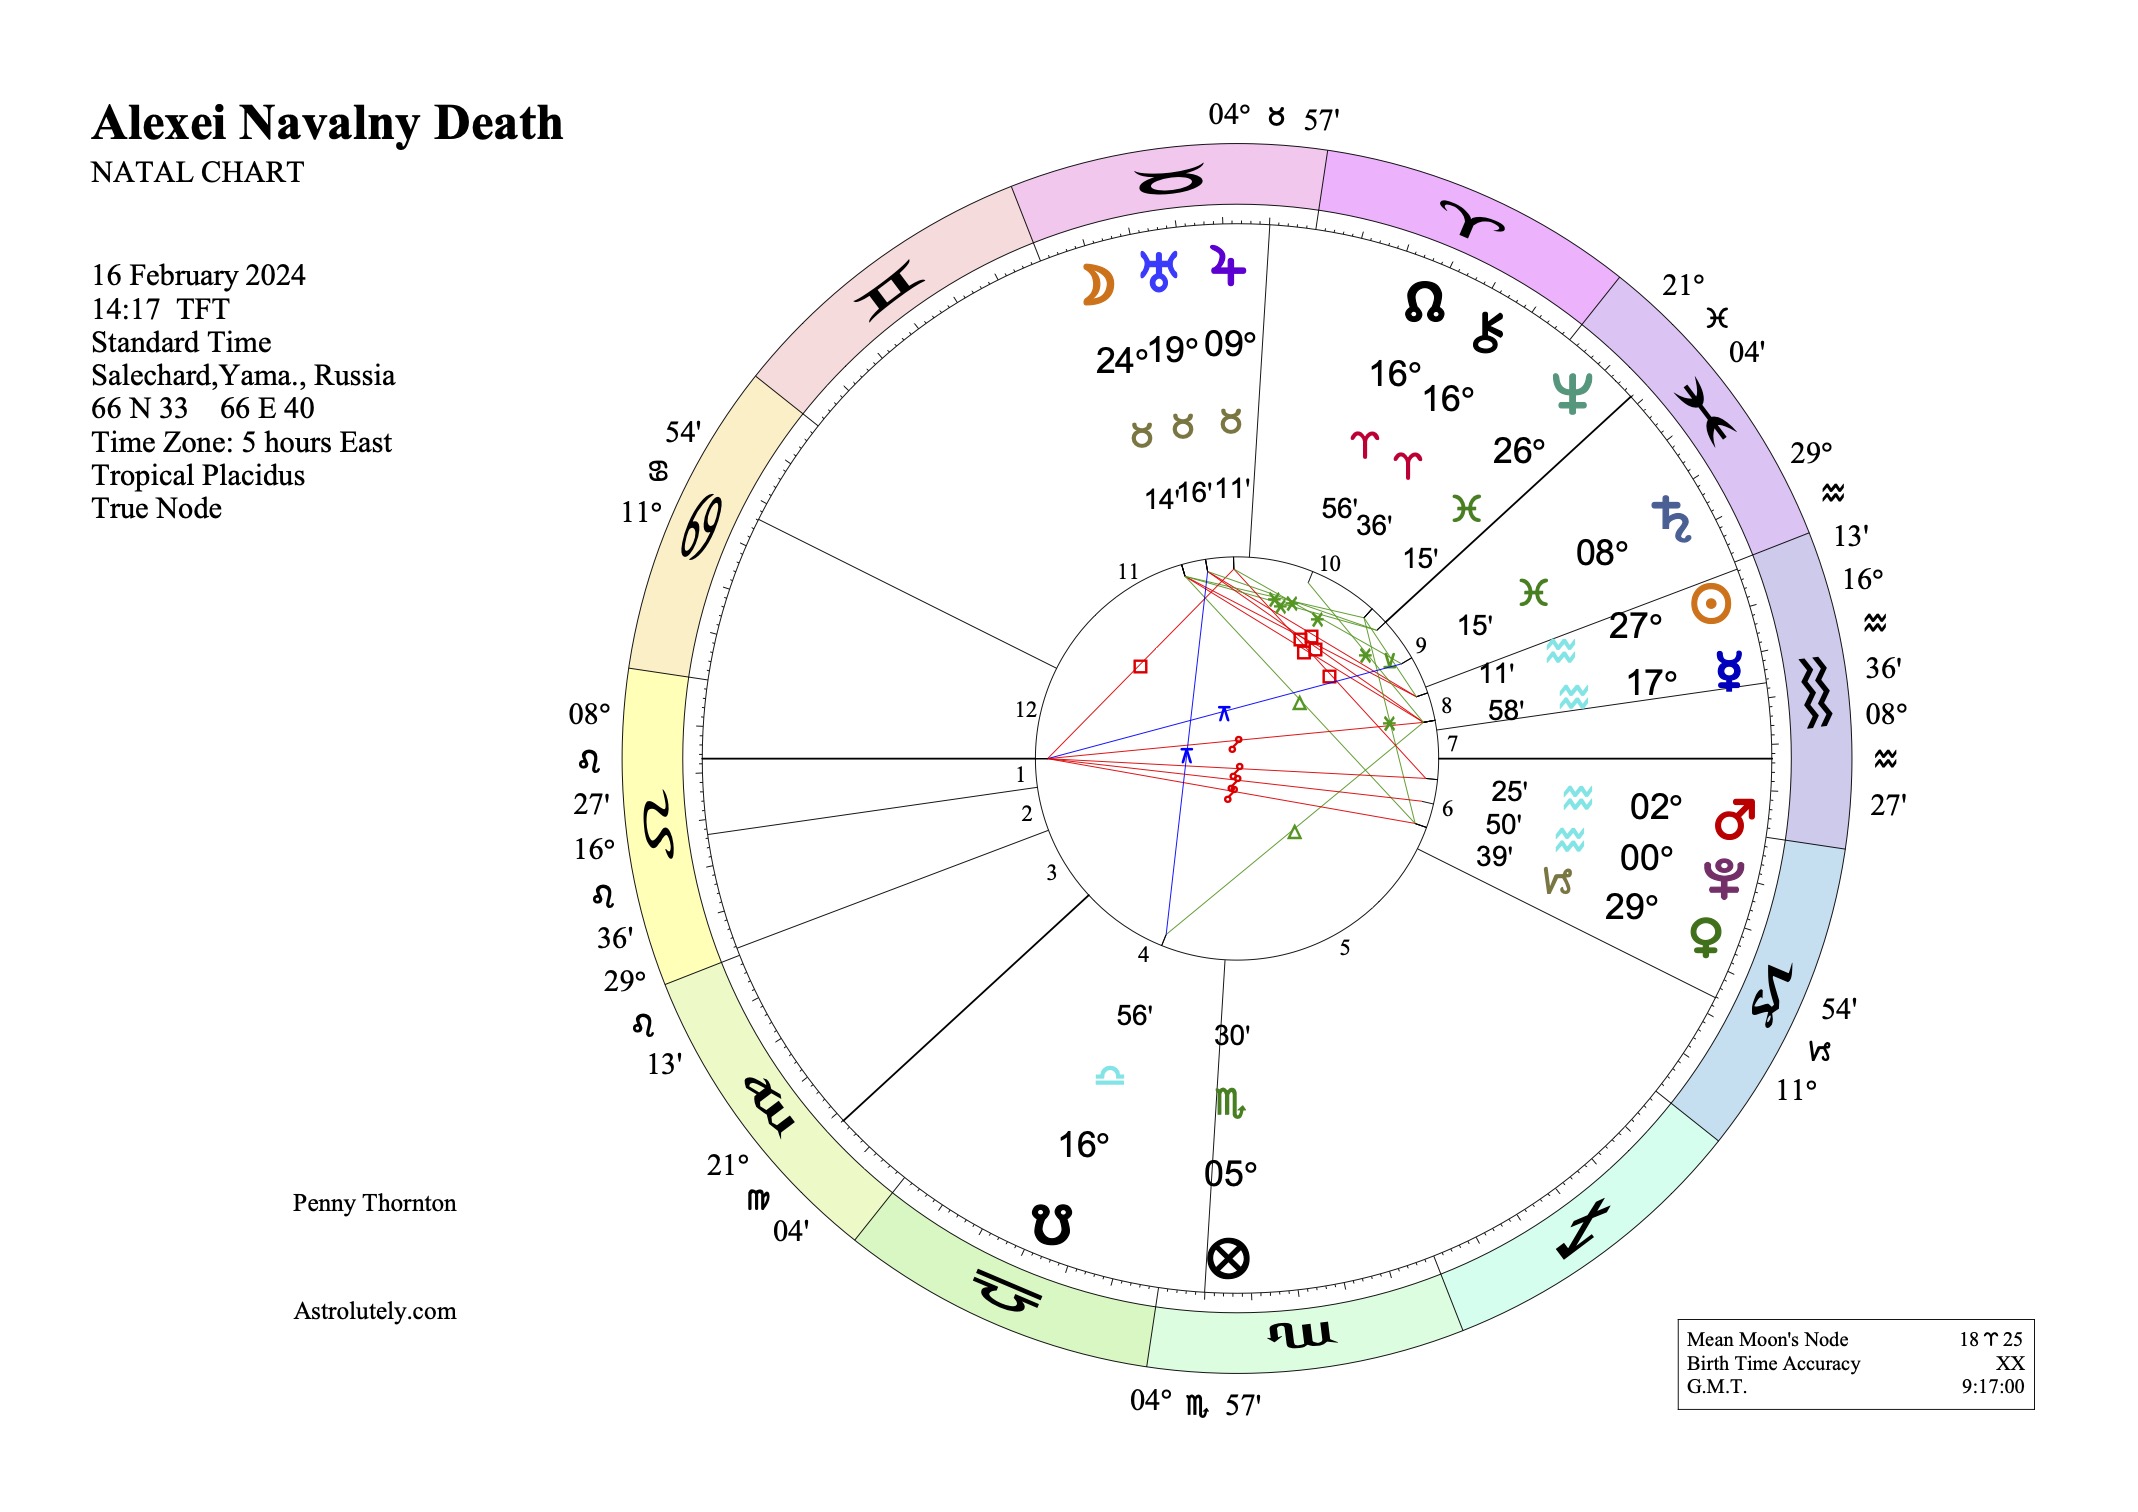 Alexei Navalny Death natal chart